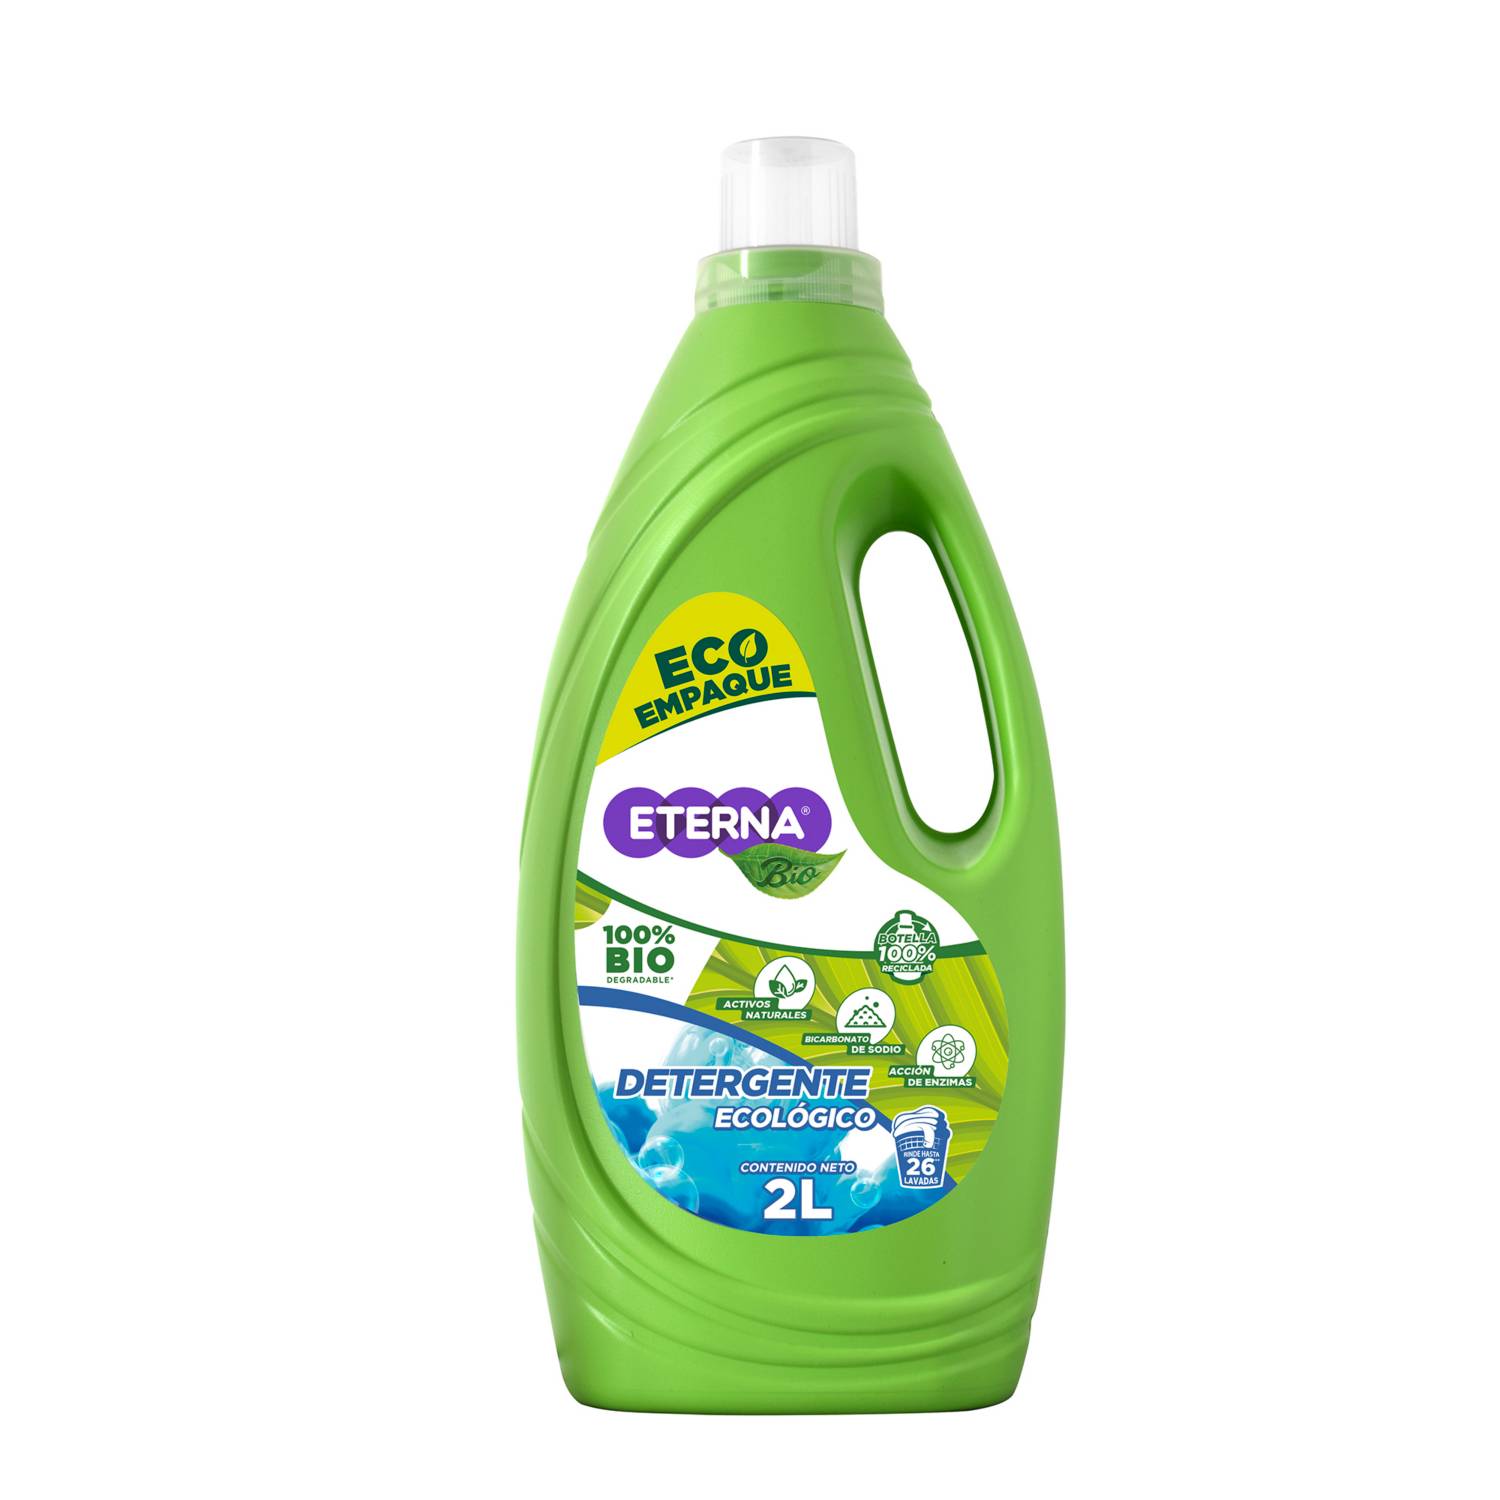 Detergente ropa bebe ecologico 1500 ml